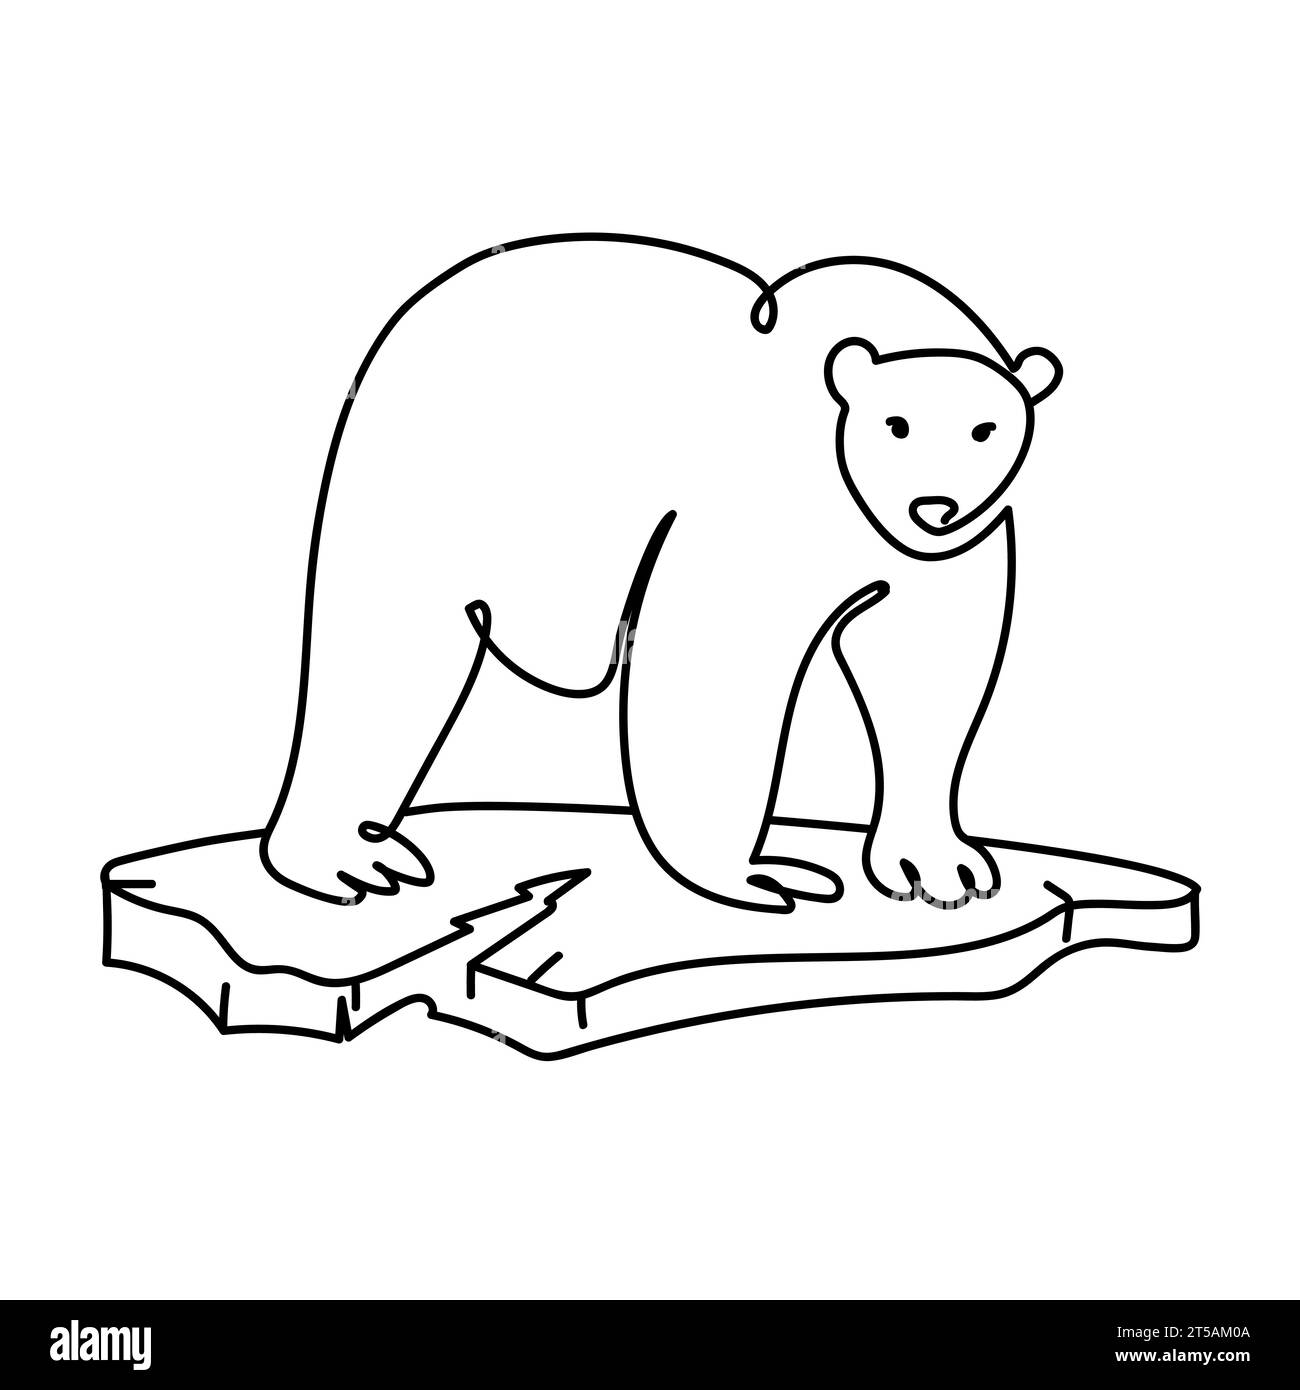 Polar bear on an ice floe Line art drawing.Global warming concept.Polar bear simple emblem icon logo design.Vector black and white illustration Stock Vector